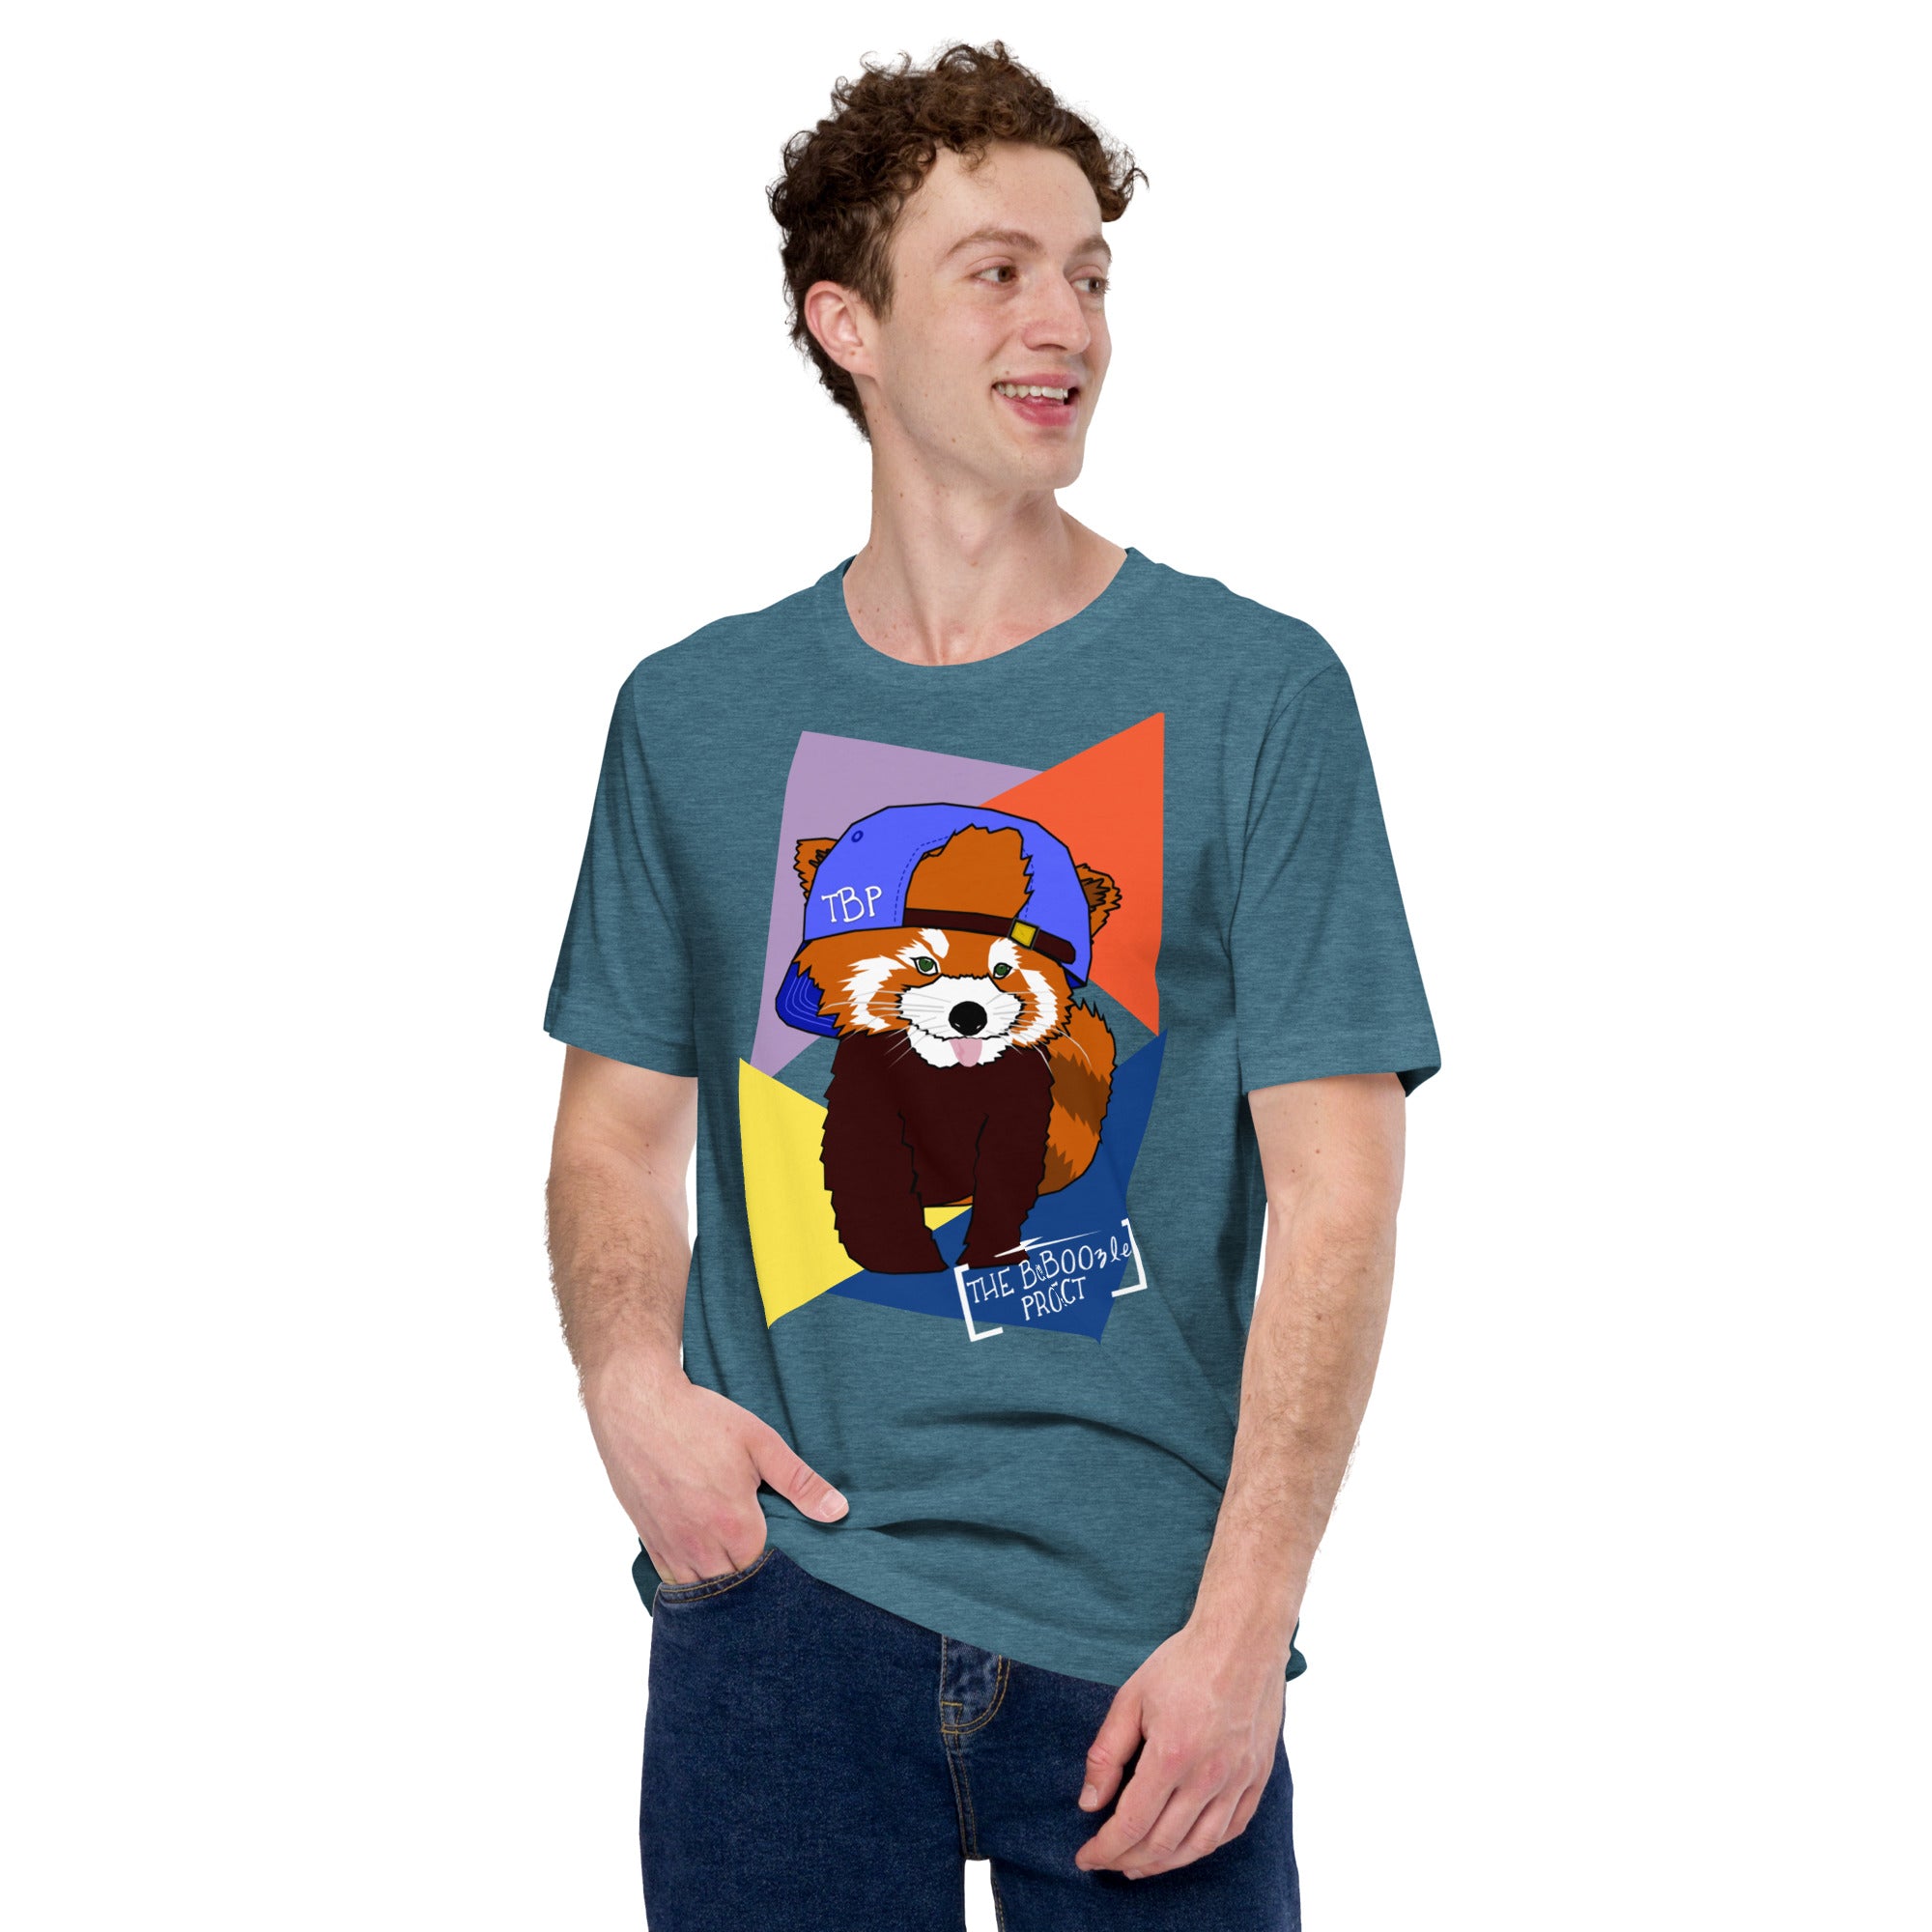 Rad Panda Art Unisex T-shirt